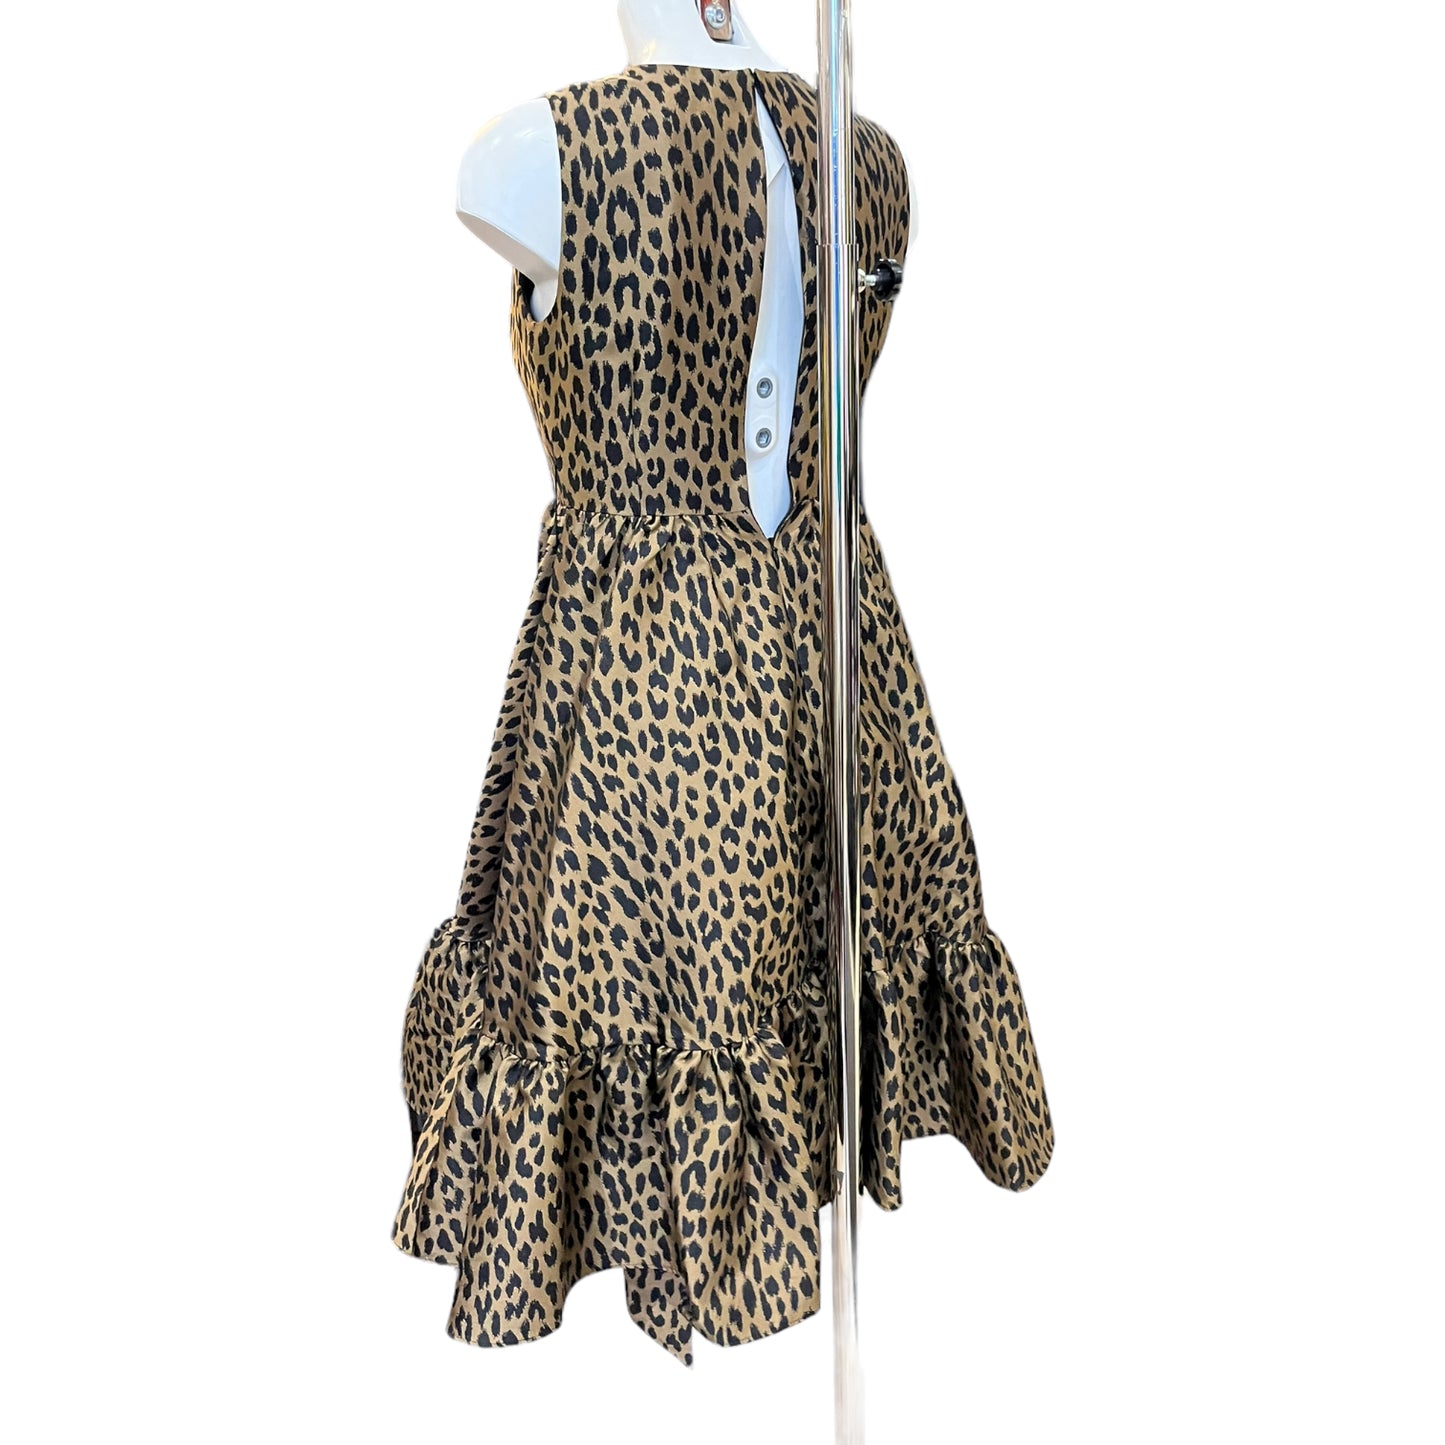 NEW Kate Spade Animal Print Dress